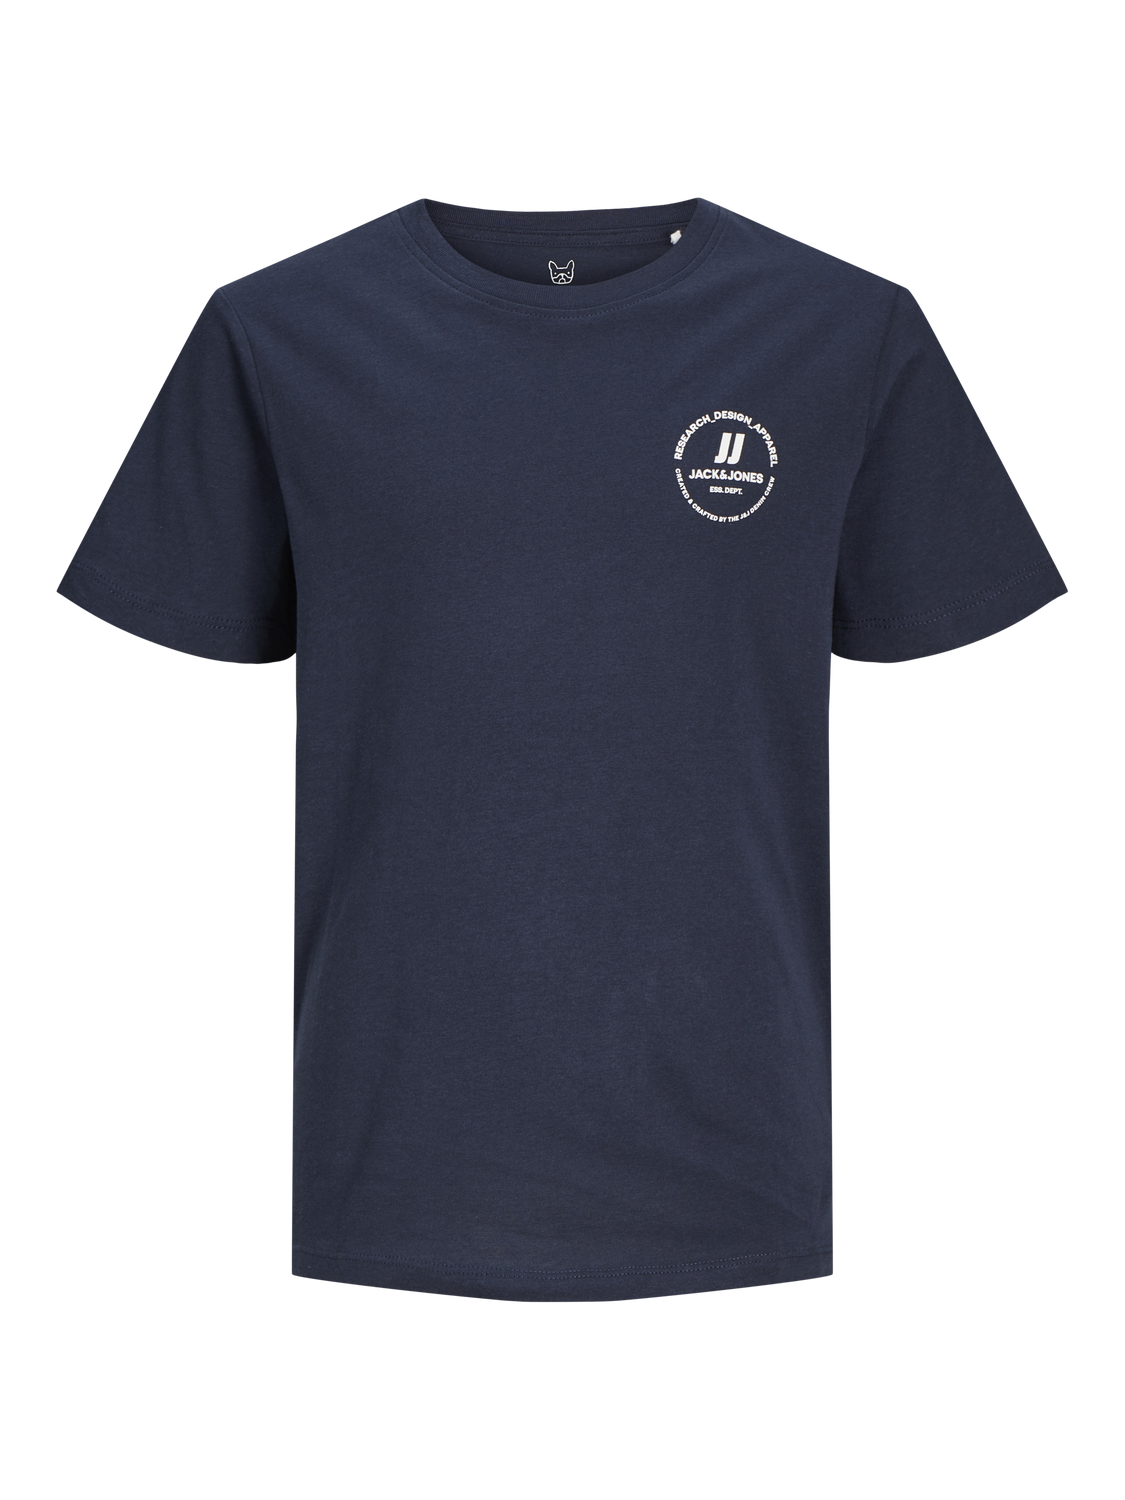 Jack & Jones T-shirt Stampato Mini -Navy Blazer - 12259964